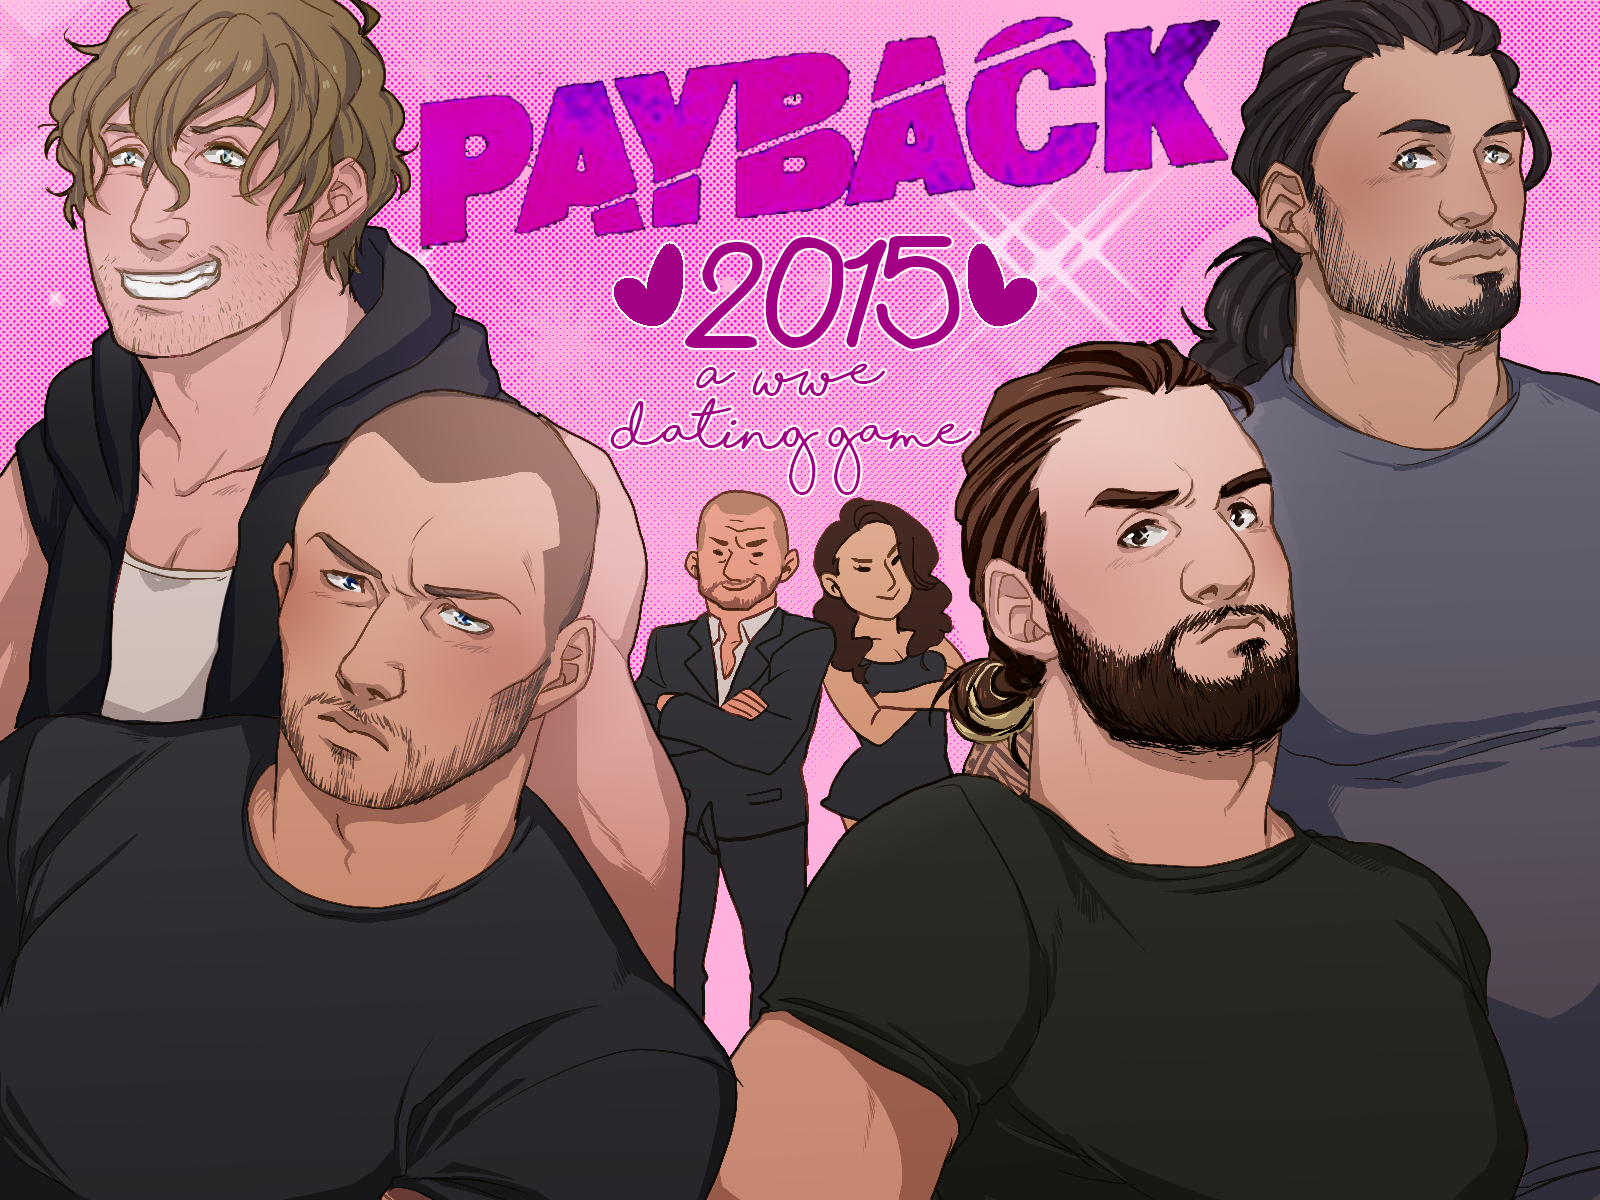 Payback 2015